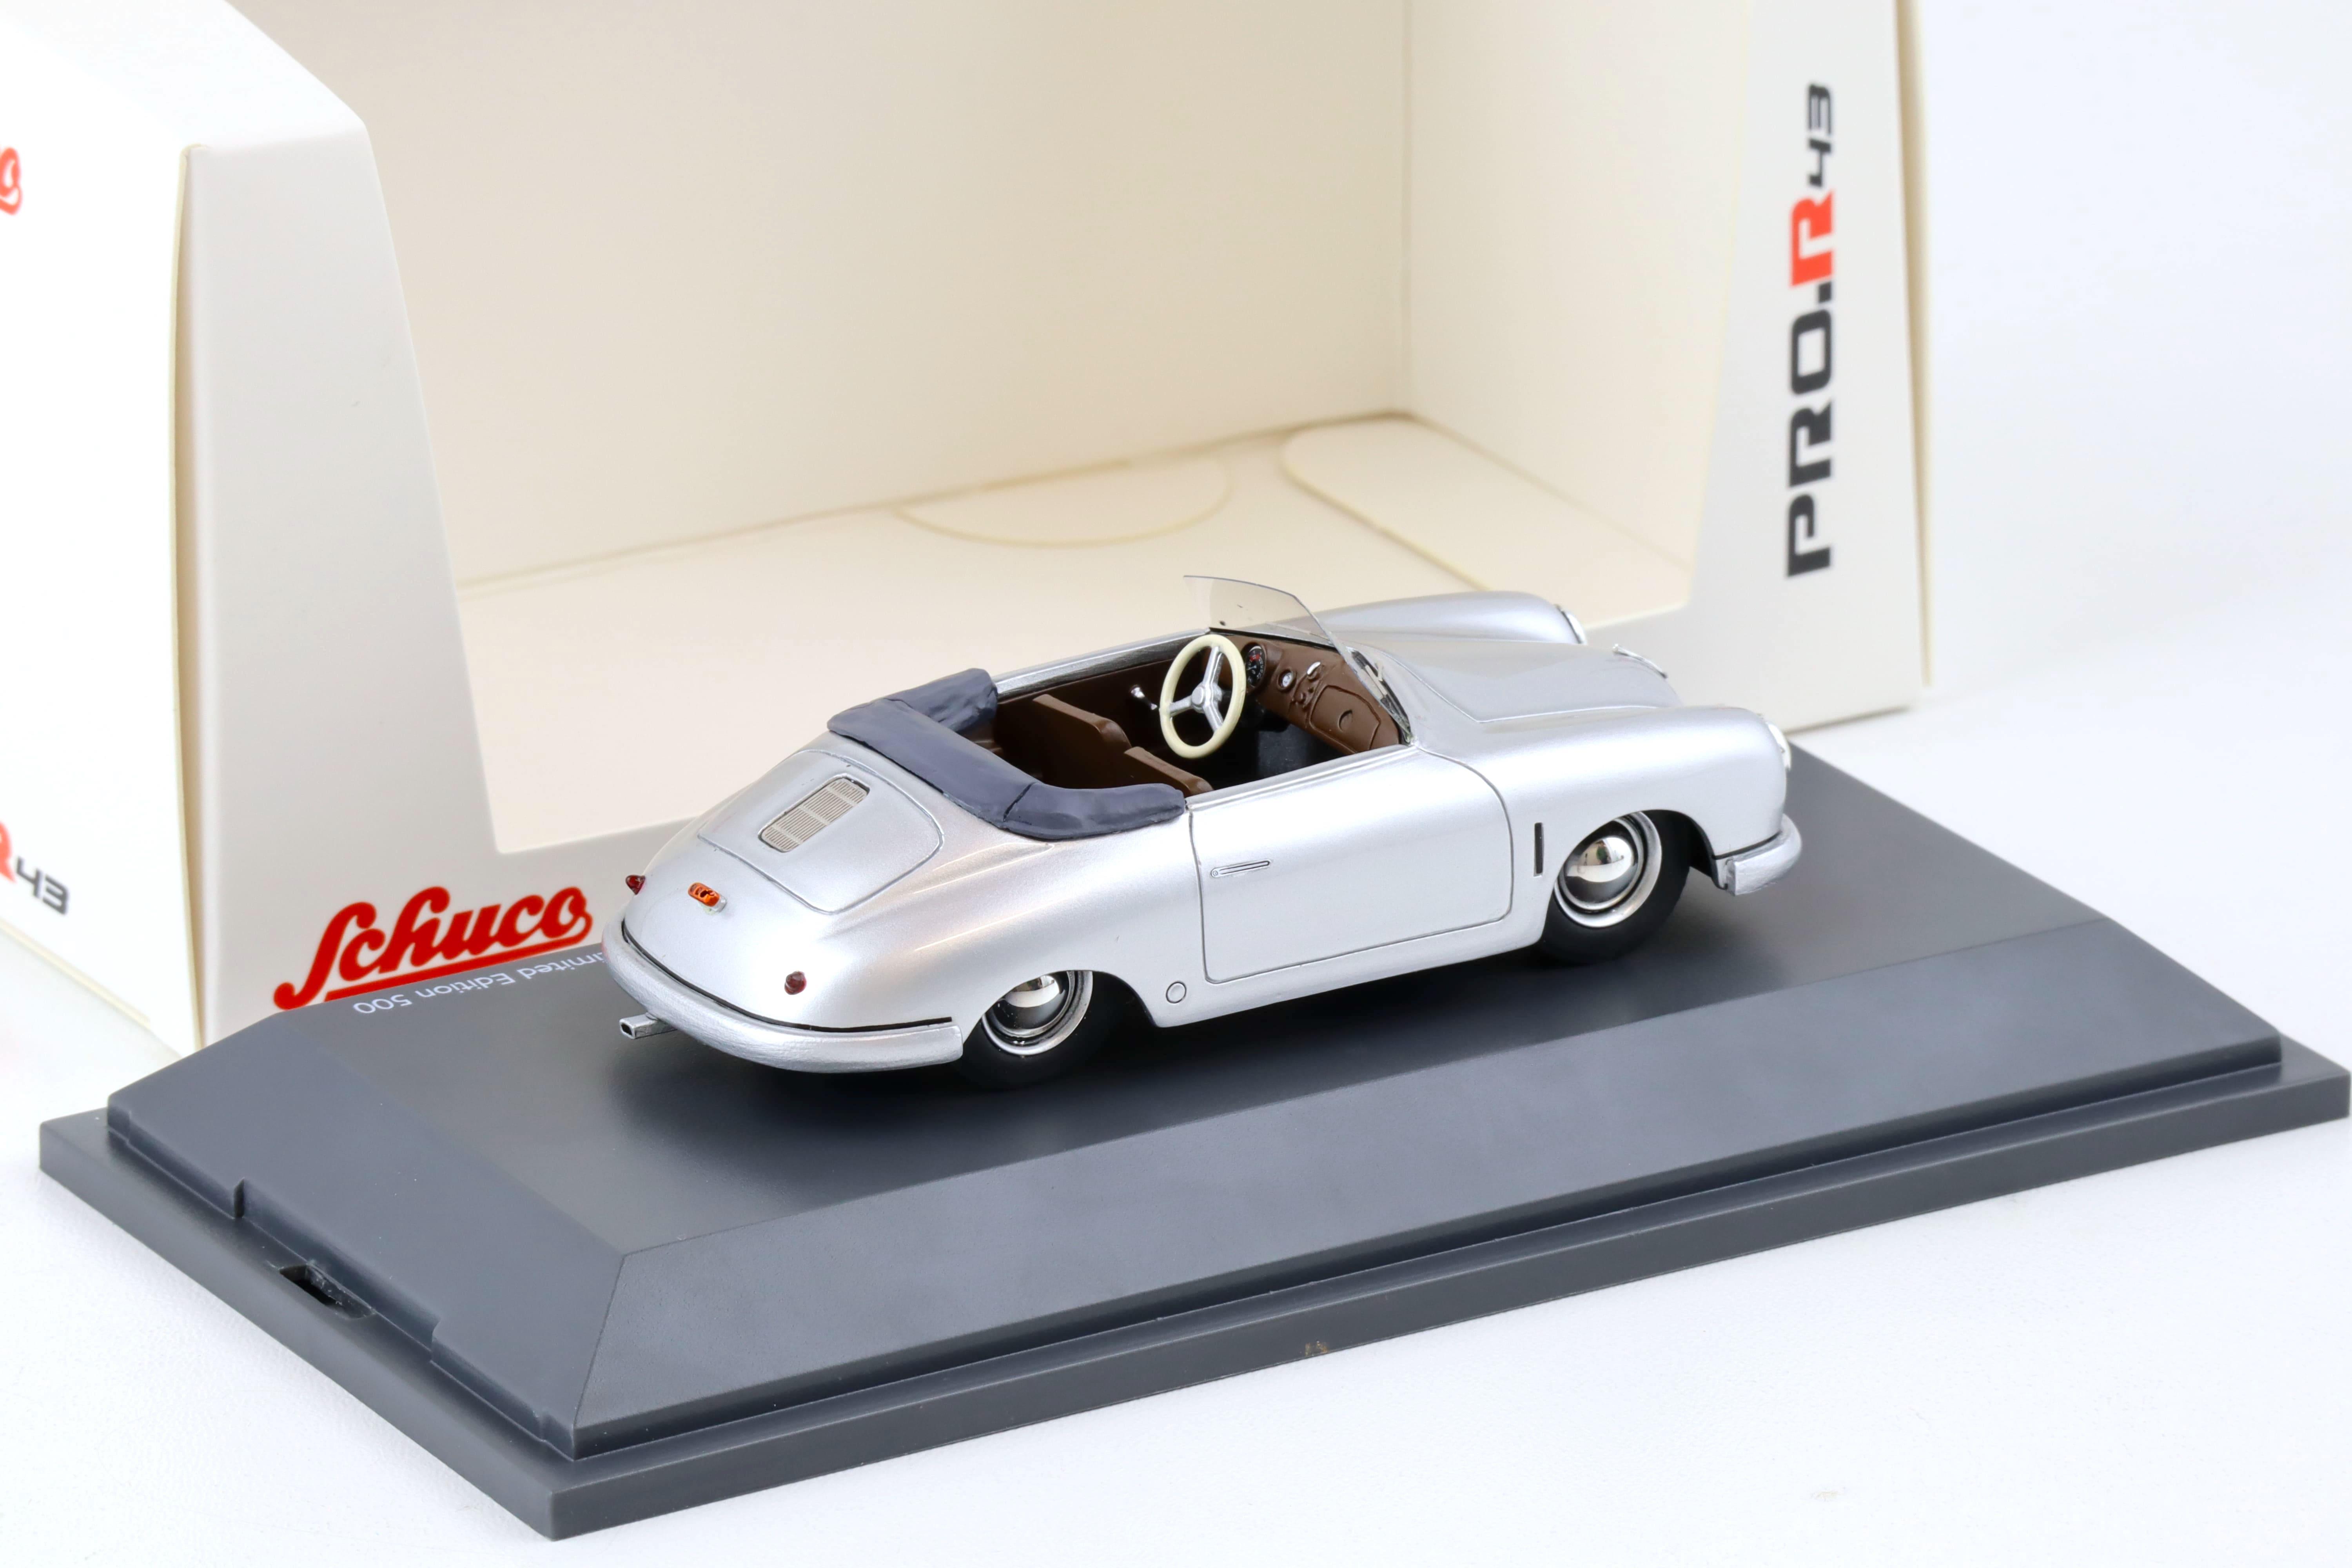 1:43 Schuco PRO.R43 Porsche 356 Gmünd Cabrio silver 450913100